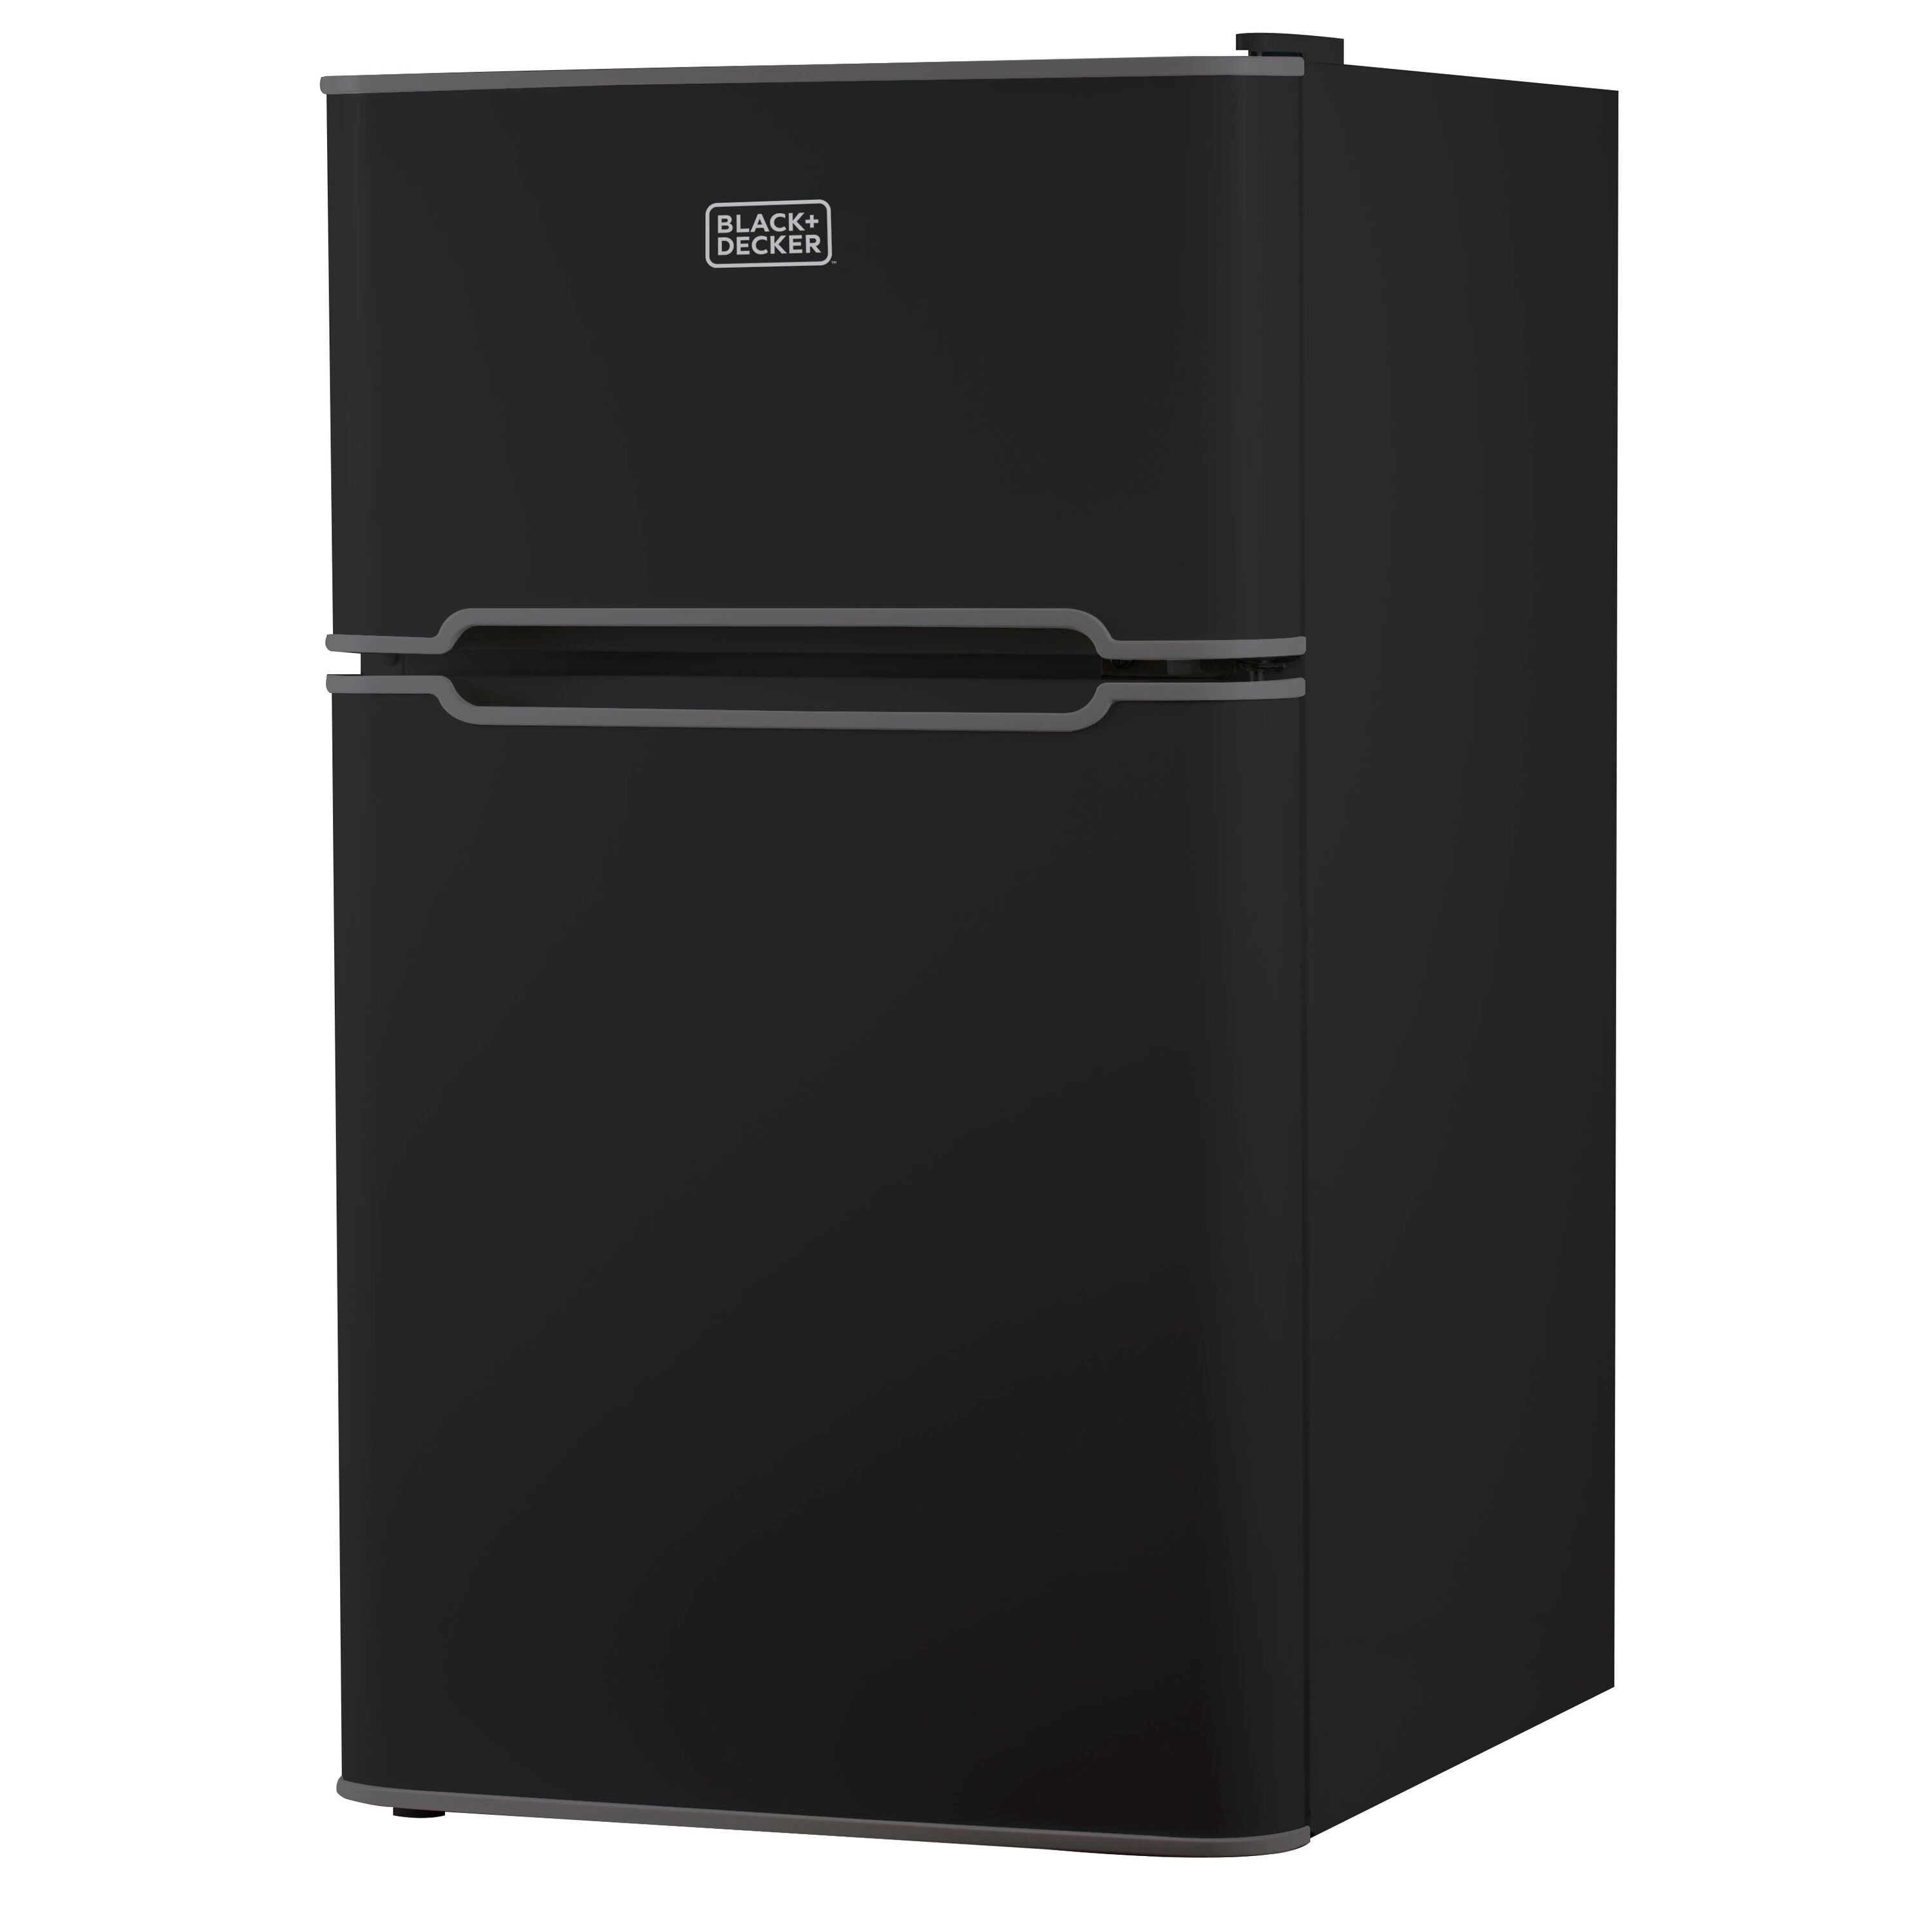 Whirlpool 3.1 cu ft Mini Refrigerator Separate Freezer Stainless